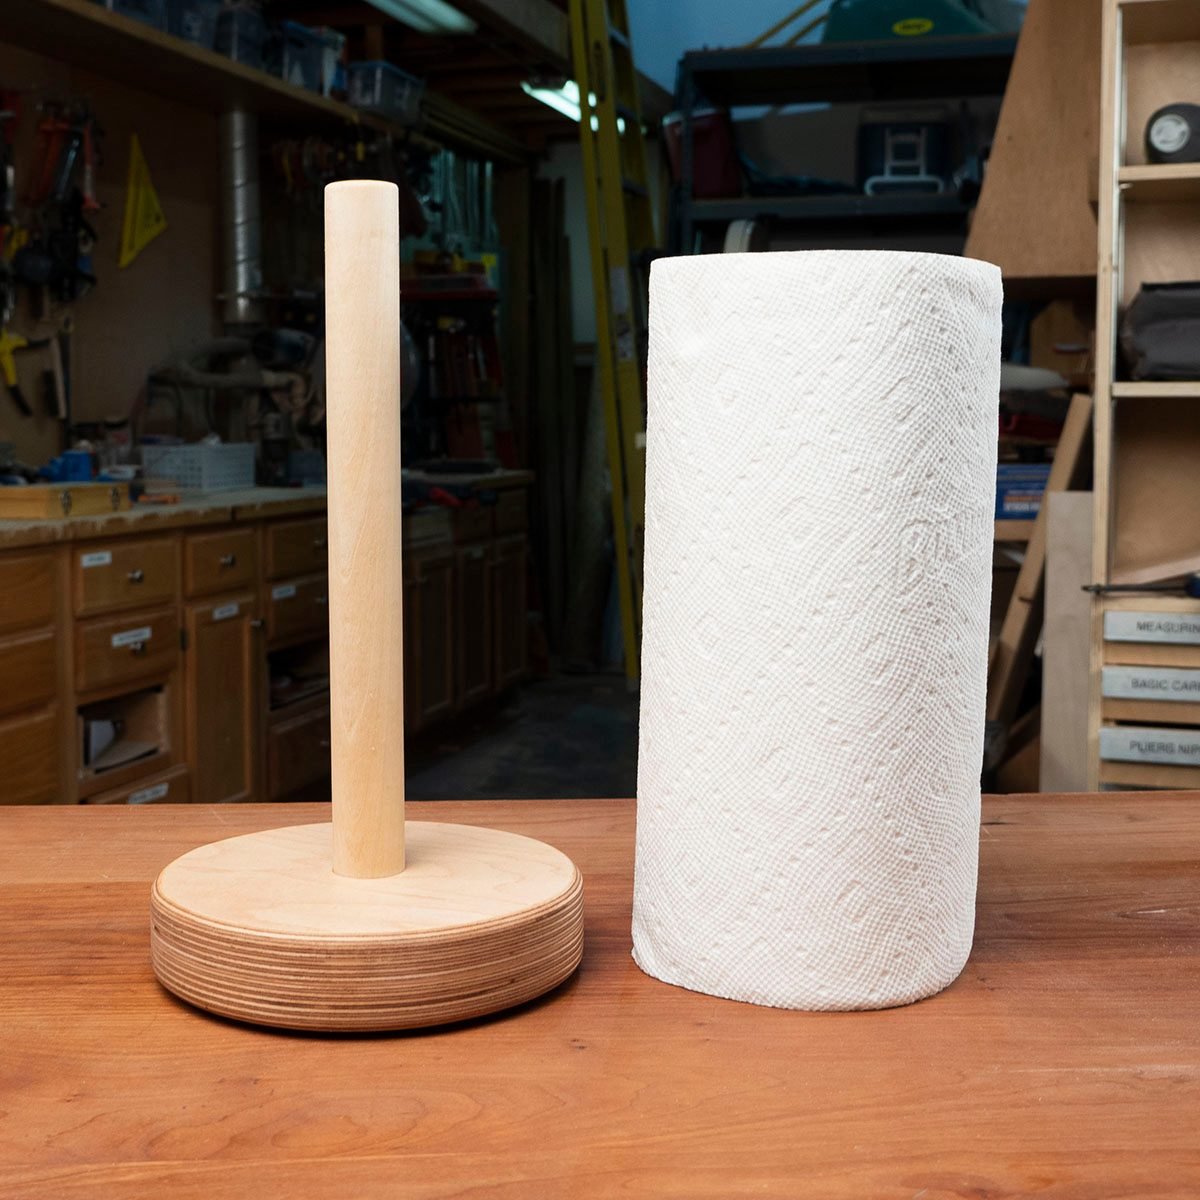 DIY Wooden Paper Towel Holder Kit - 2 Pack, Light House Style